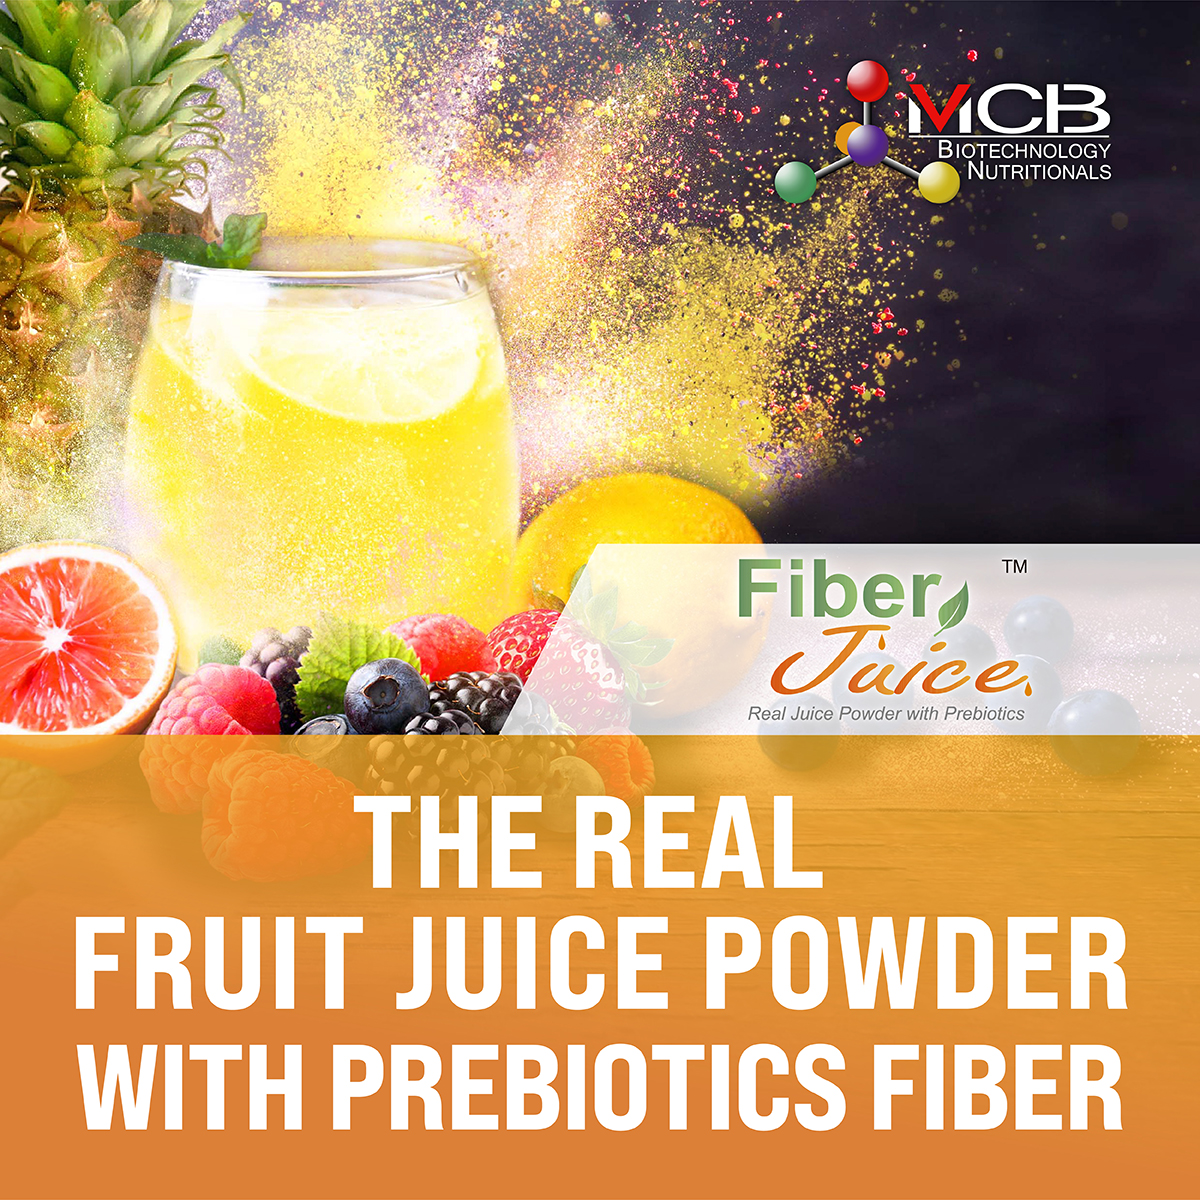 FIBERJUICE™ Real Juice Powder with Prebiotics